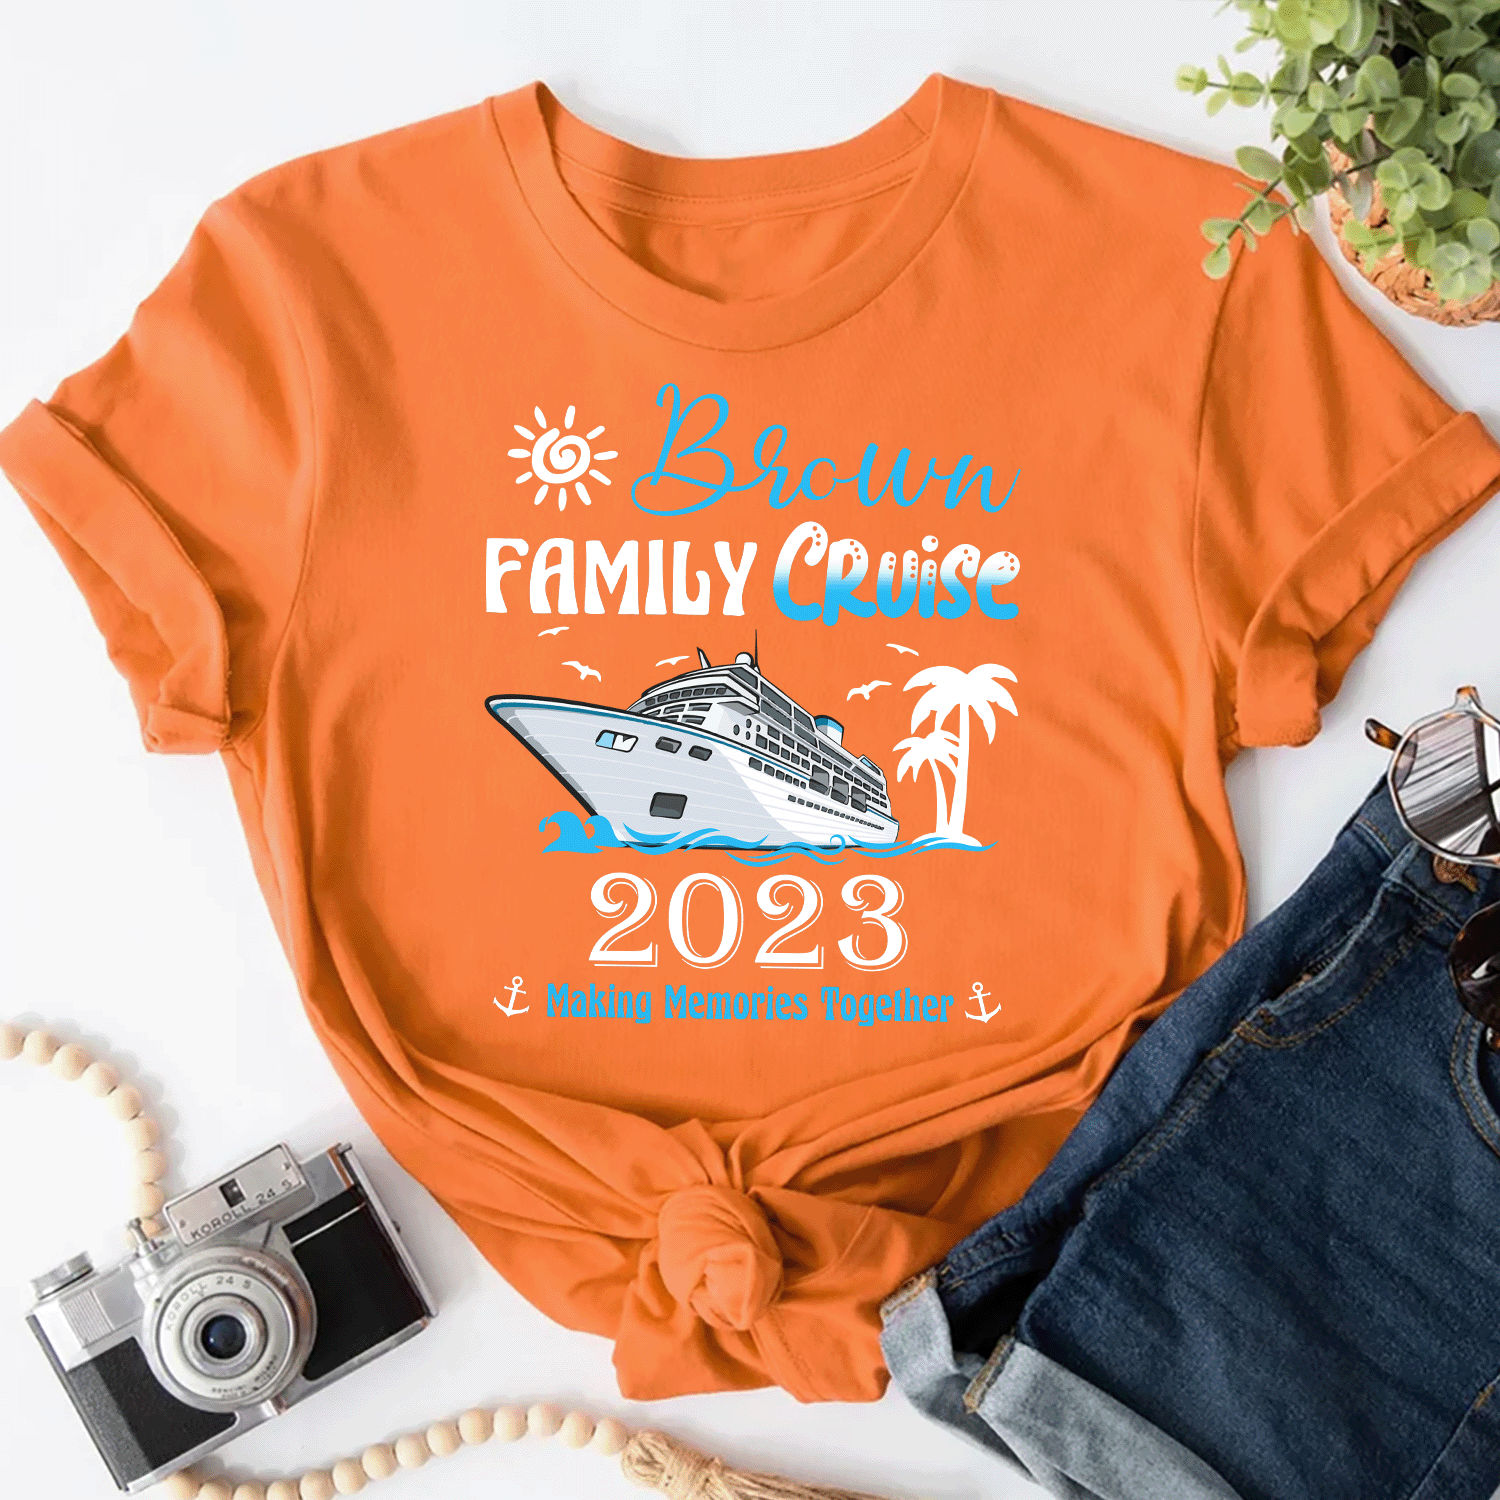 Family Matching Shirt - Personalized Family Cruise 2024 Shirt,Making  Memories Shirts, Family Cruise Shirts, Family Matching Shirt, Family  Vacation Shirt, Holiday Vacation Shirt30214